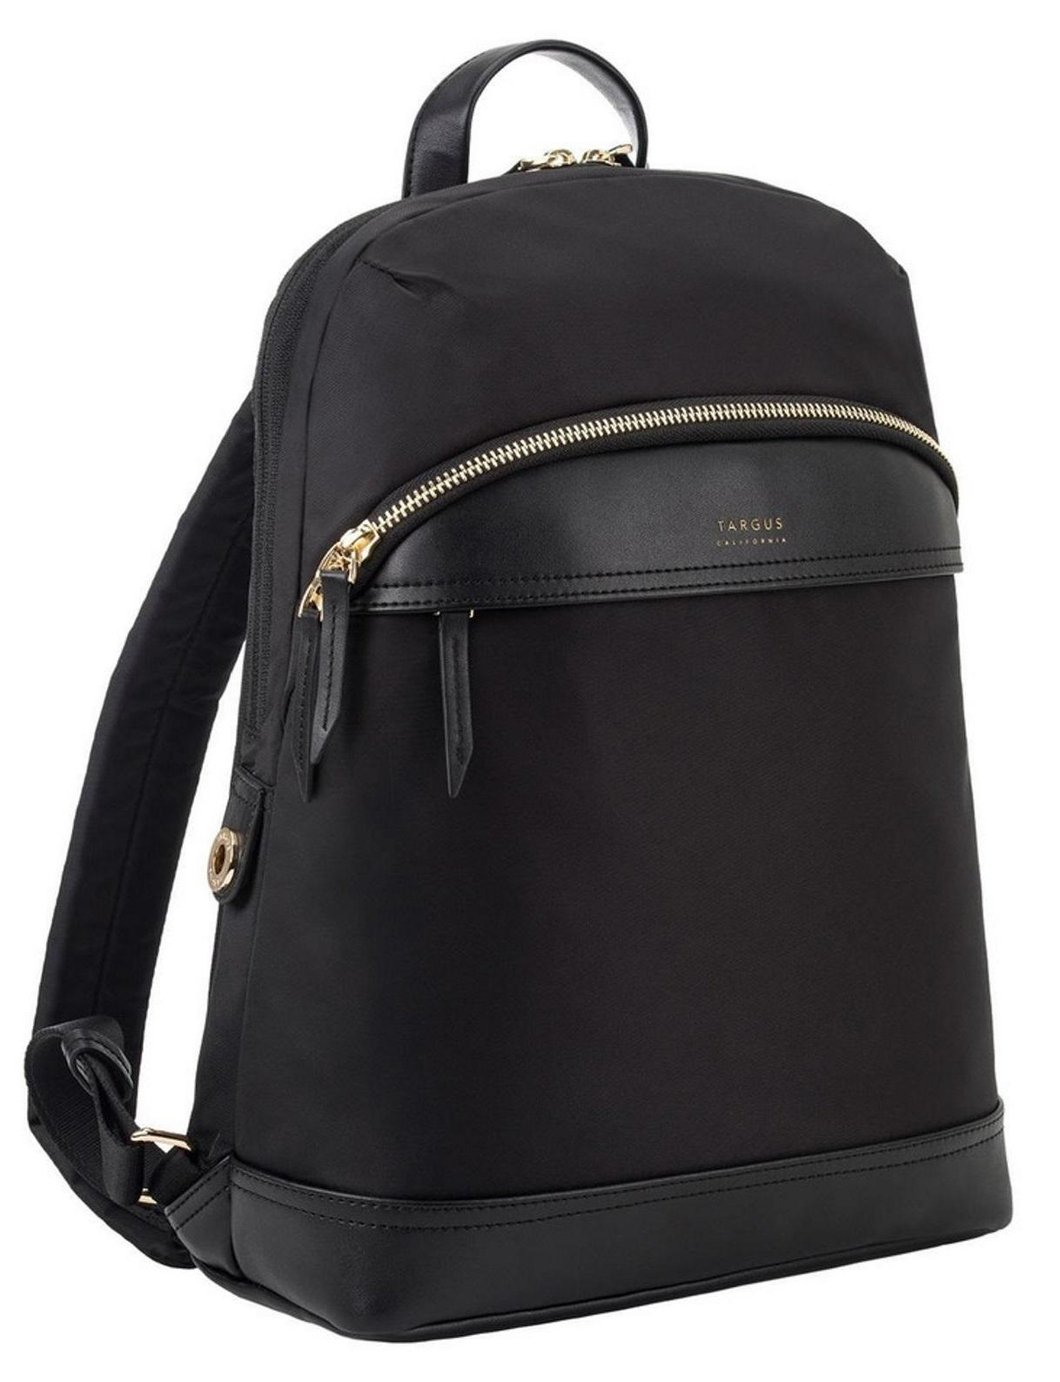 Targus Newport 12 Inch Laptop Backpack - Black